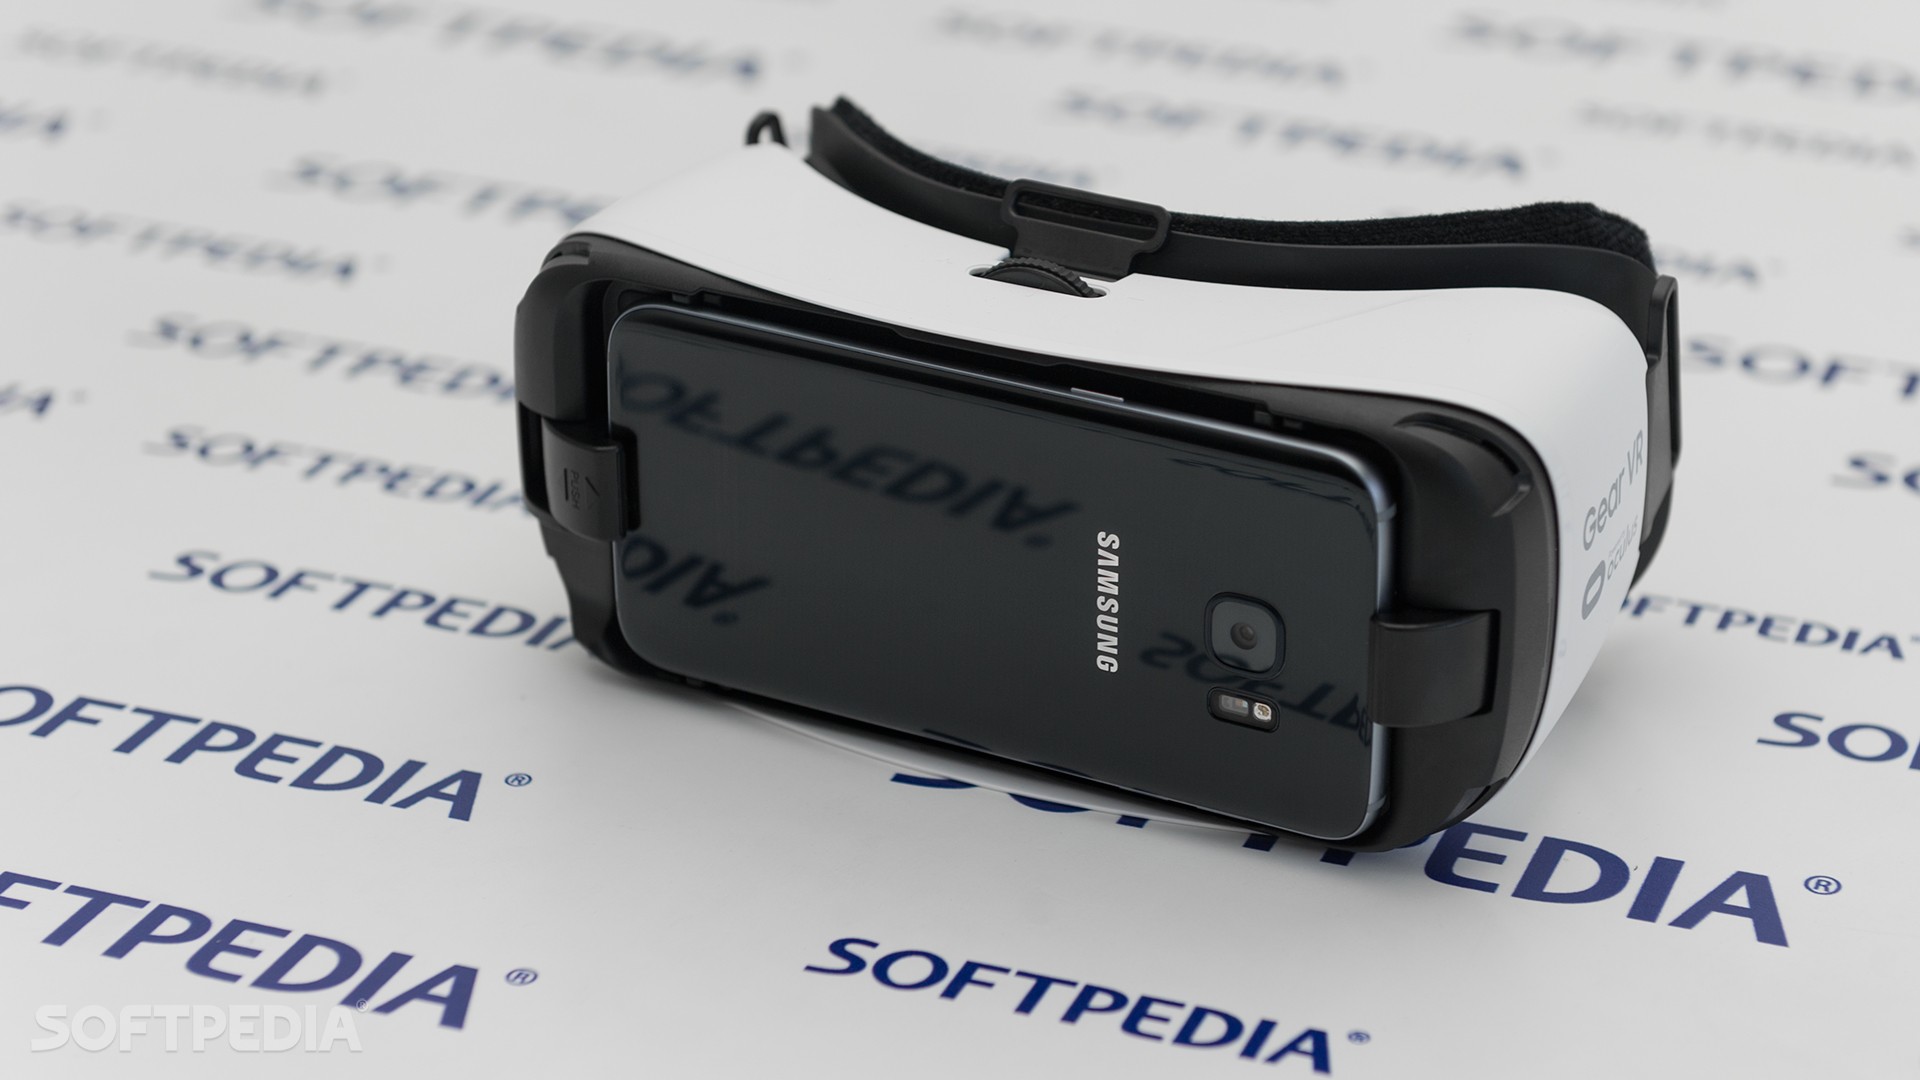 Sentimenteel Opsommen Ontdooien, ontdooien, vorst ontdooien Samsung Galaxy S7 Edge and Gear VR - The Experience